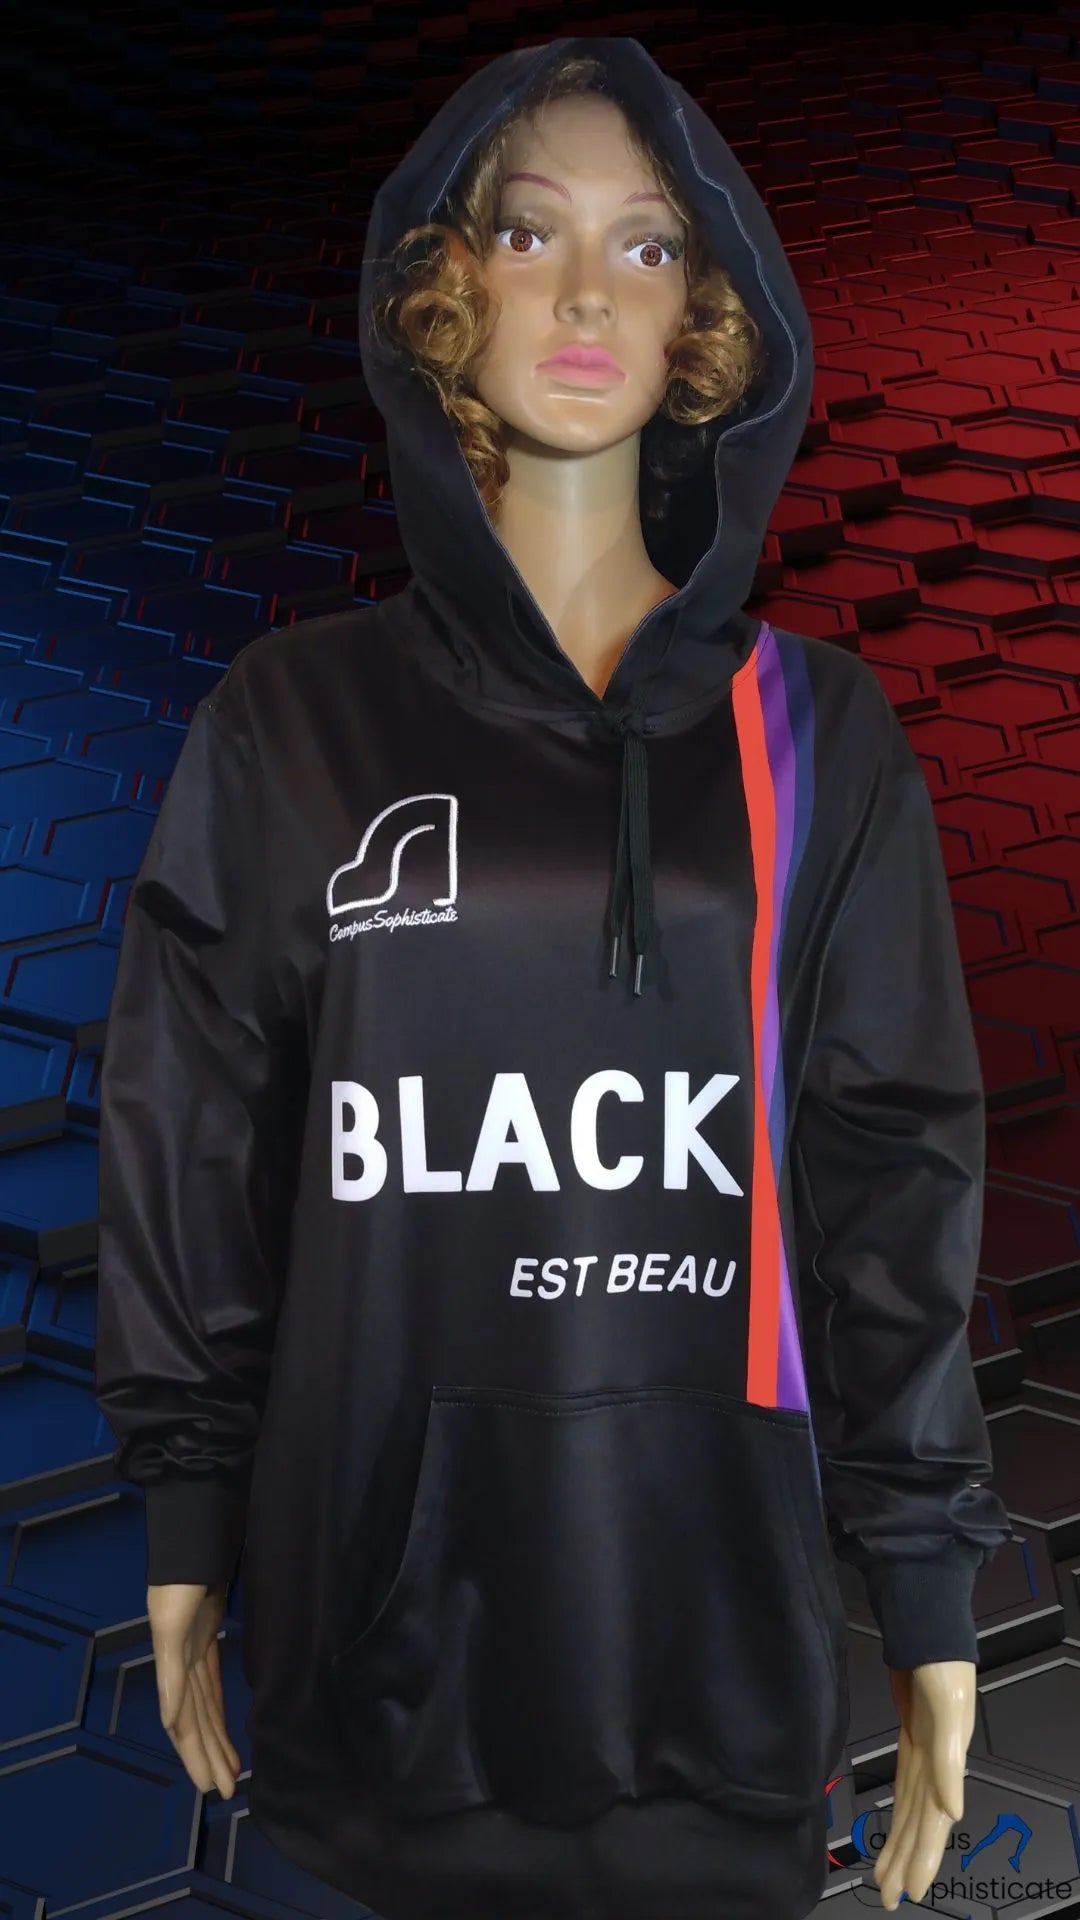 Campus Sophisticate Premium Female Hoodies BLACK EST BEAU - Black Is Beautiful